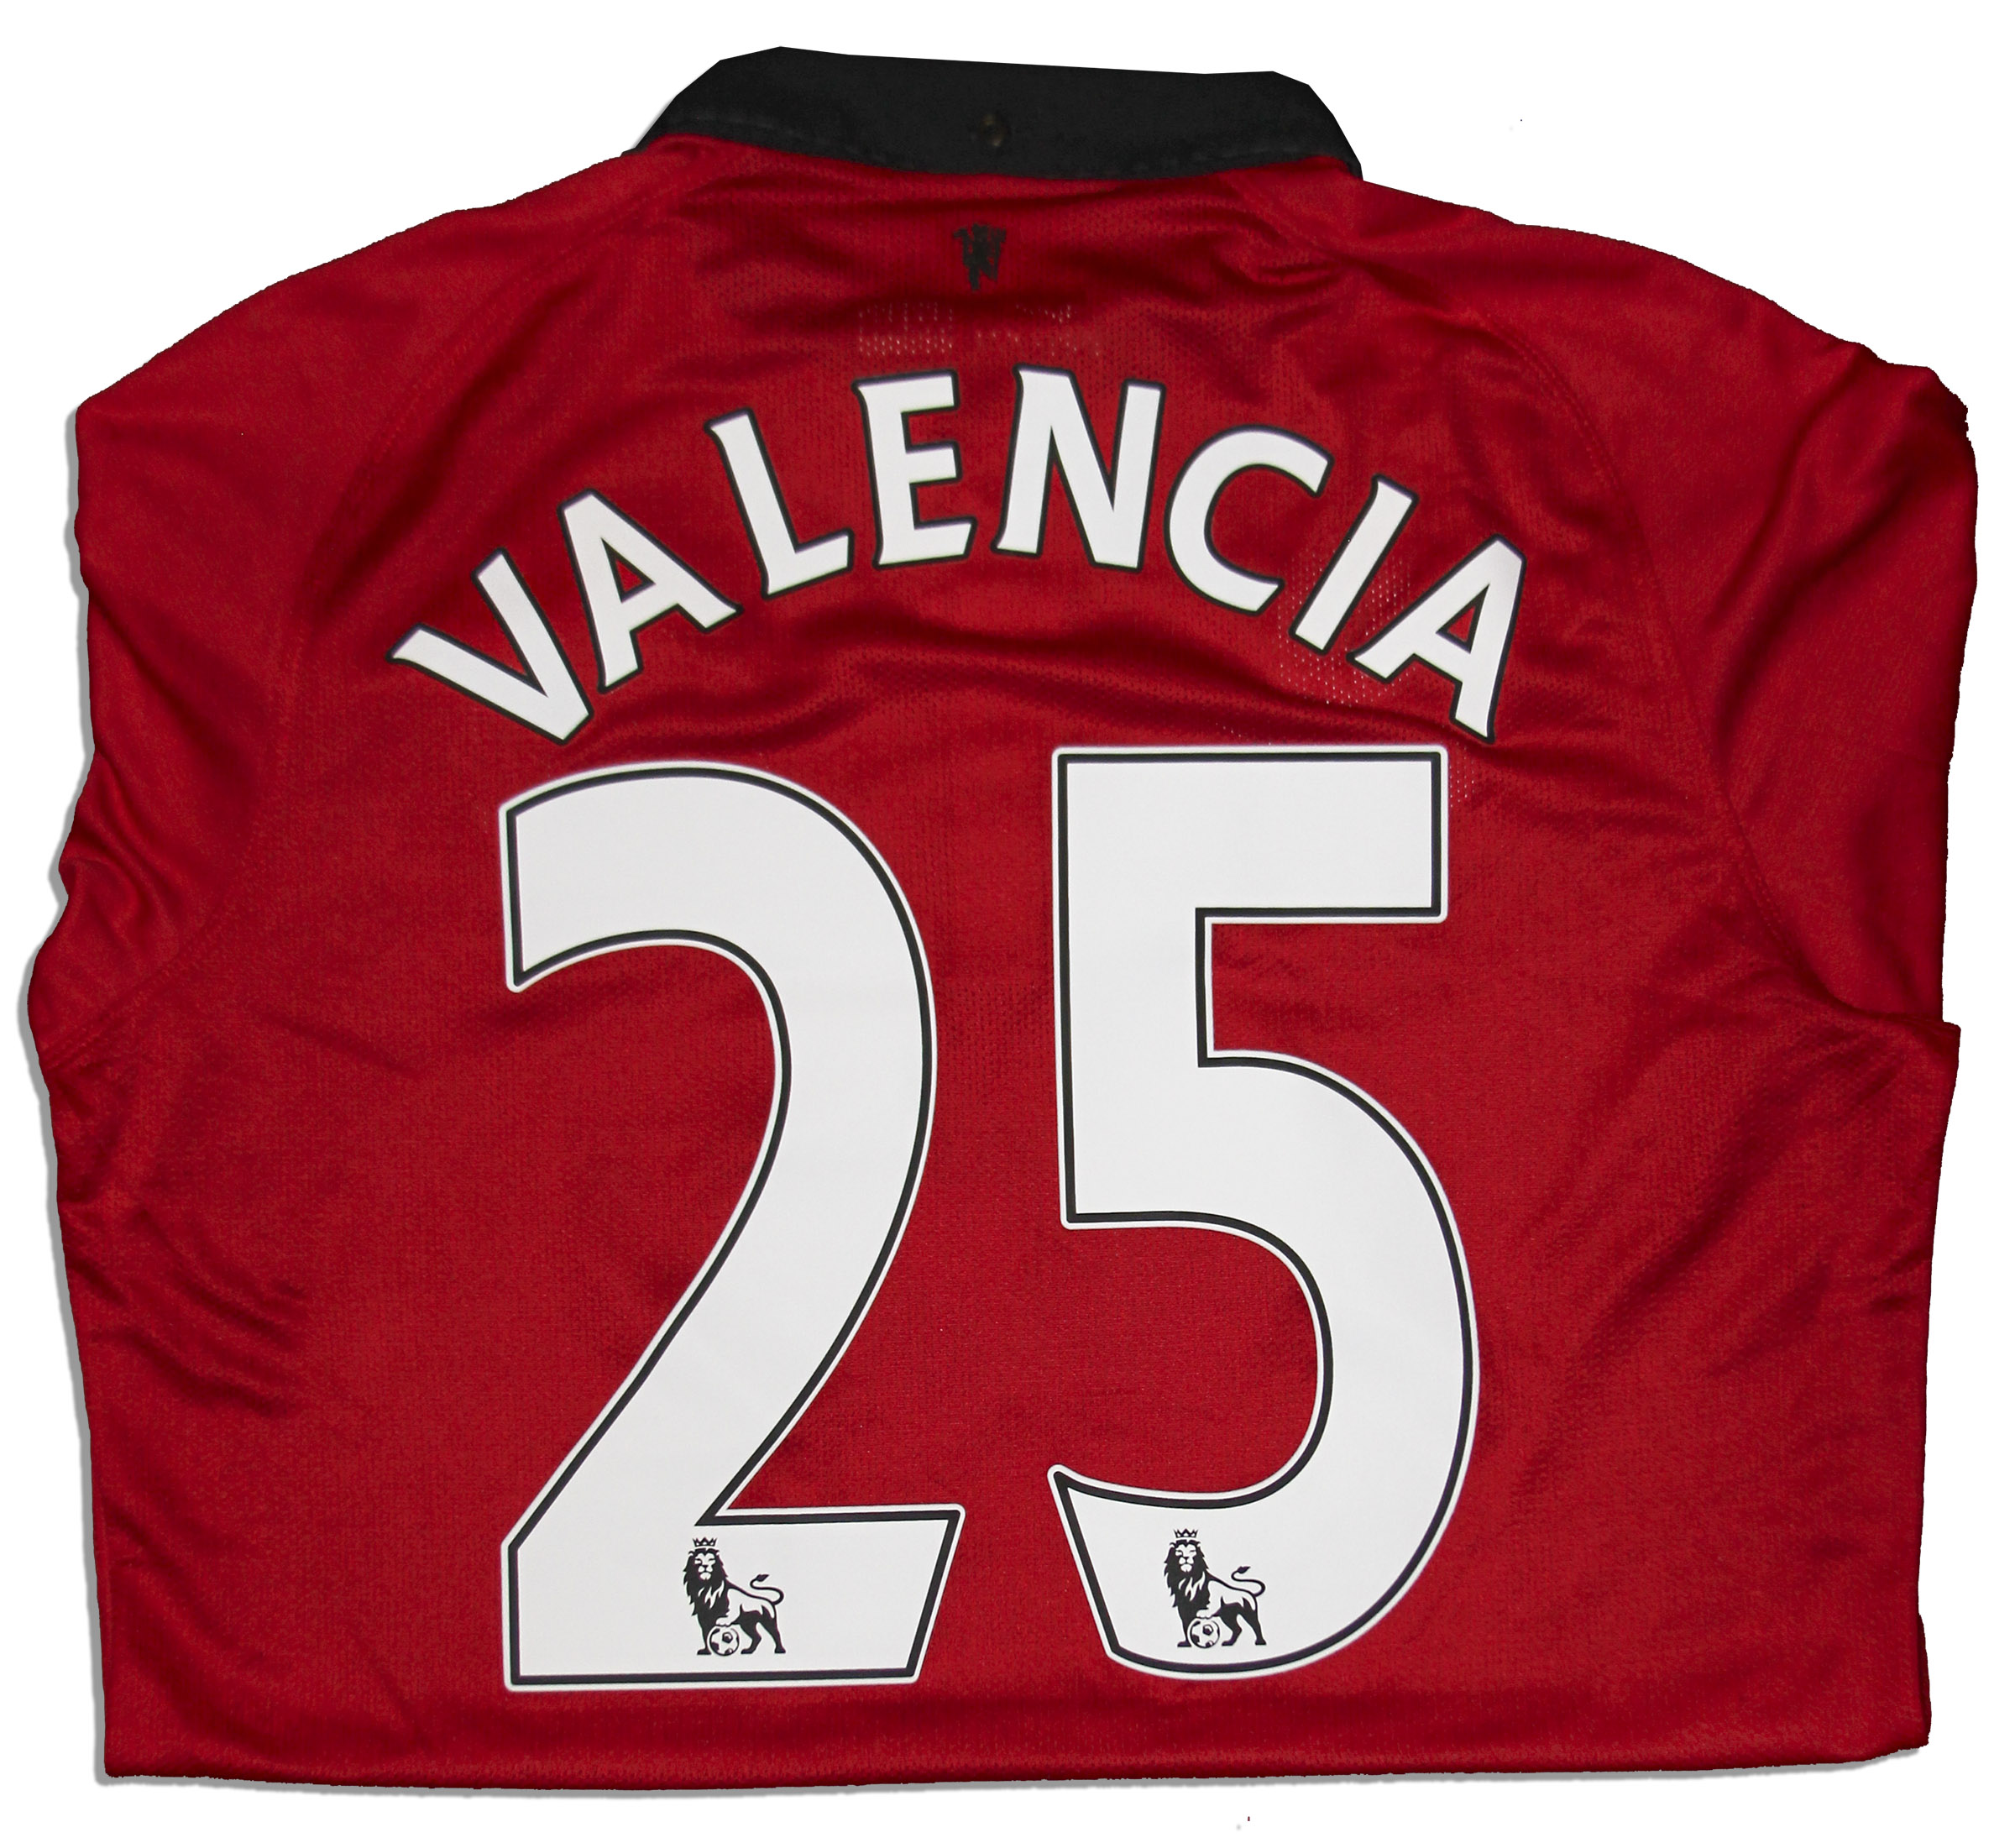 Antonio Valencia Signed Match Worn 